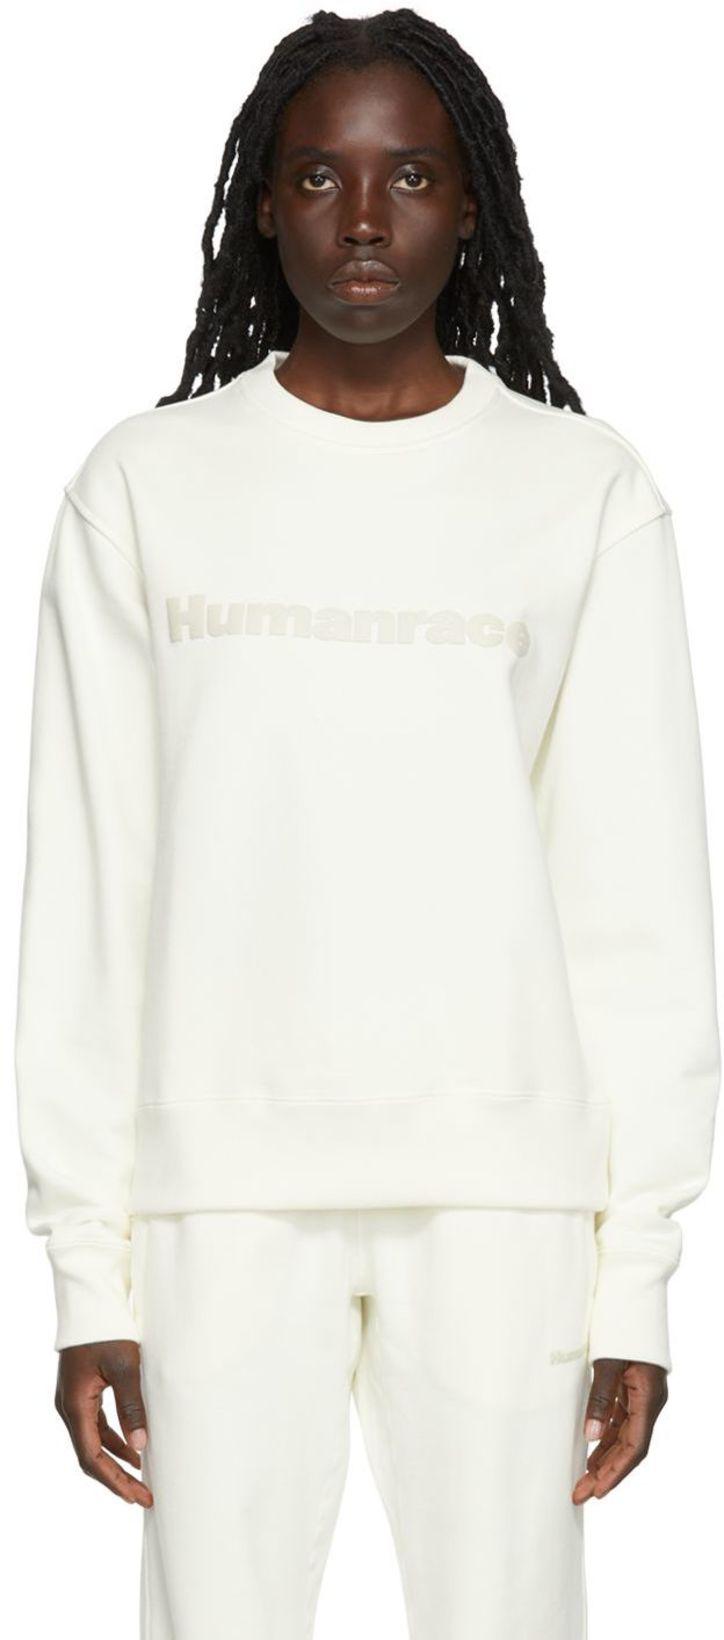 Off-White Humanrace Basics Sweatshirt by ADIDAS X HUMANRACE BY PHARRELL WILLIAMS